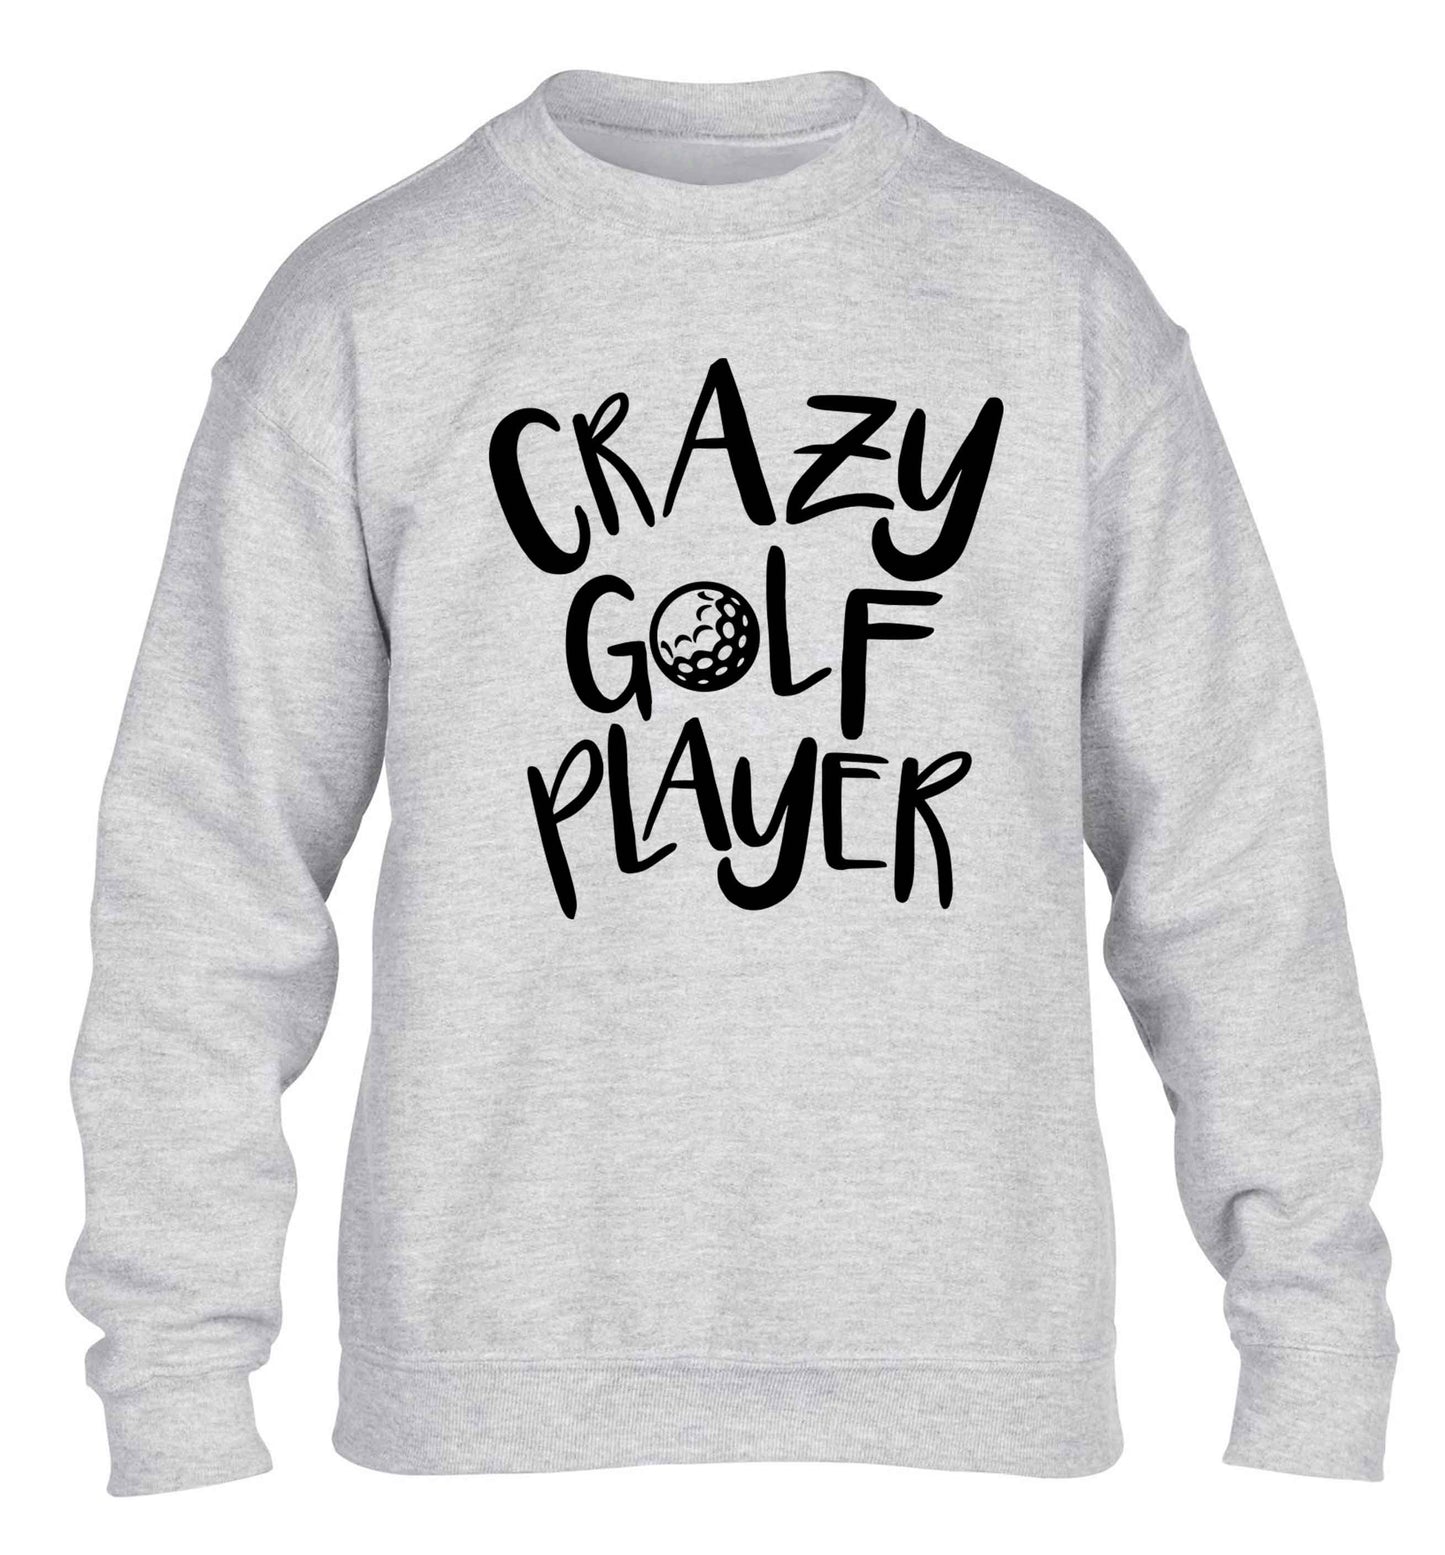 Crazy golf player children's grey sweater 12-13 Years